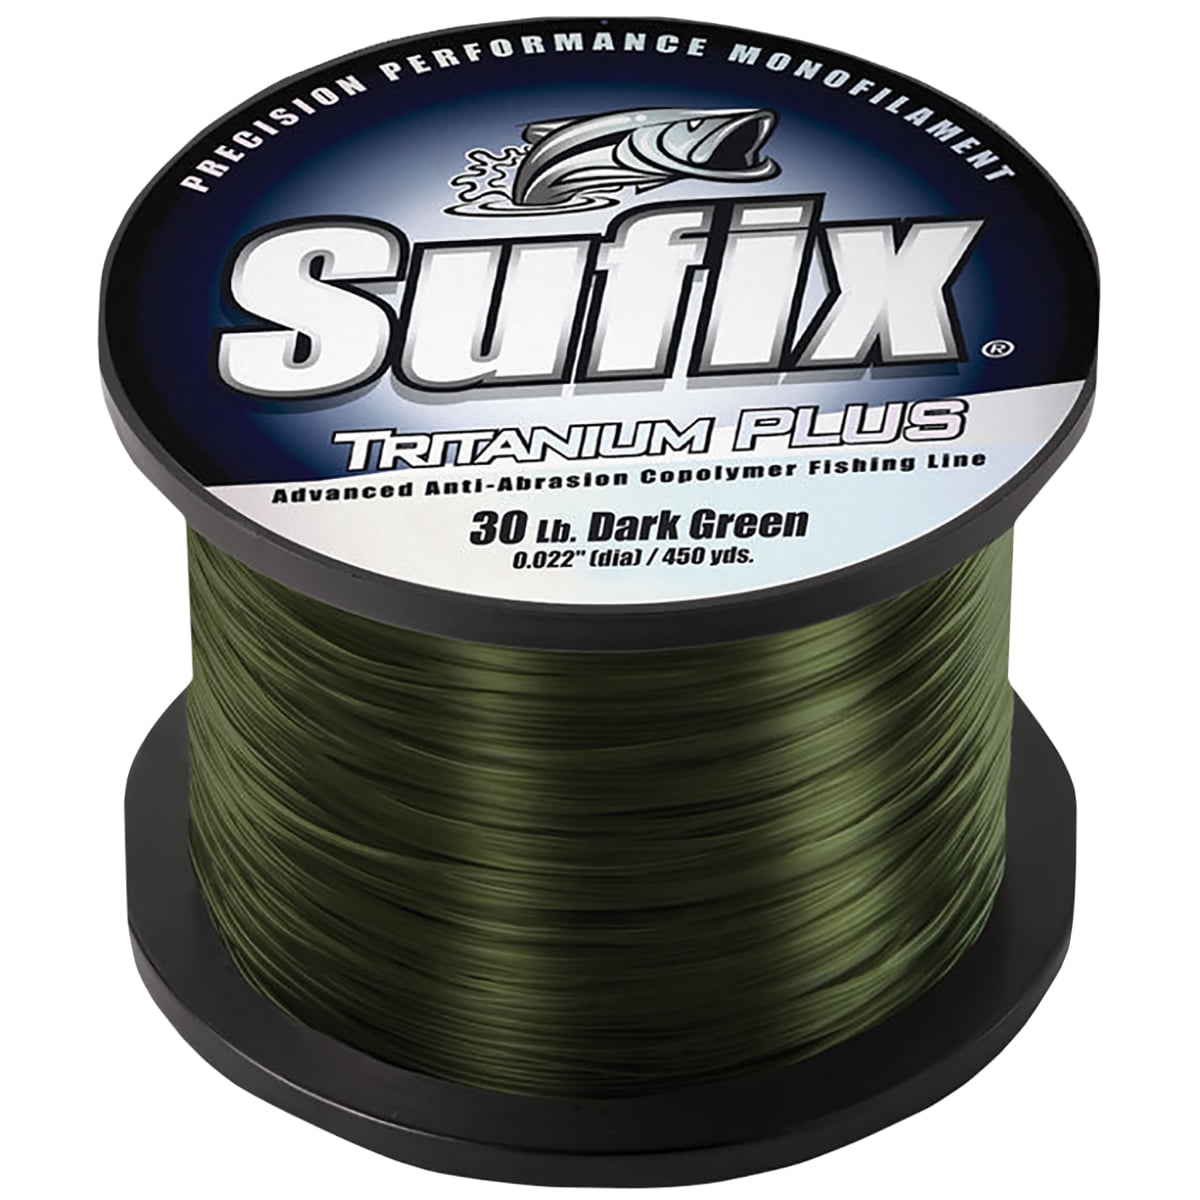 Sufix Trintanium Plus Anti-Abrasion Copolymer Fishing Line-10 lb